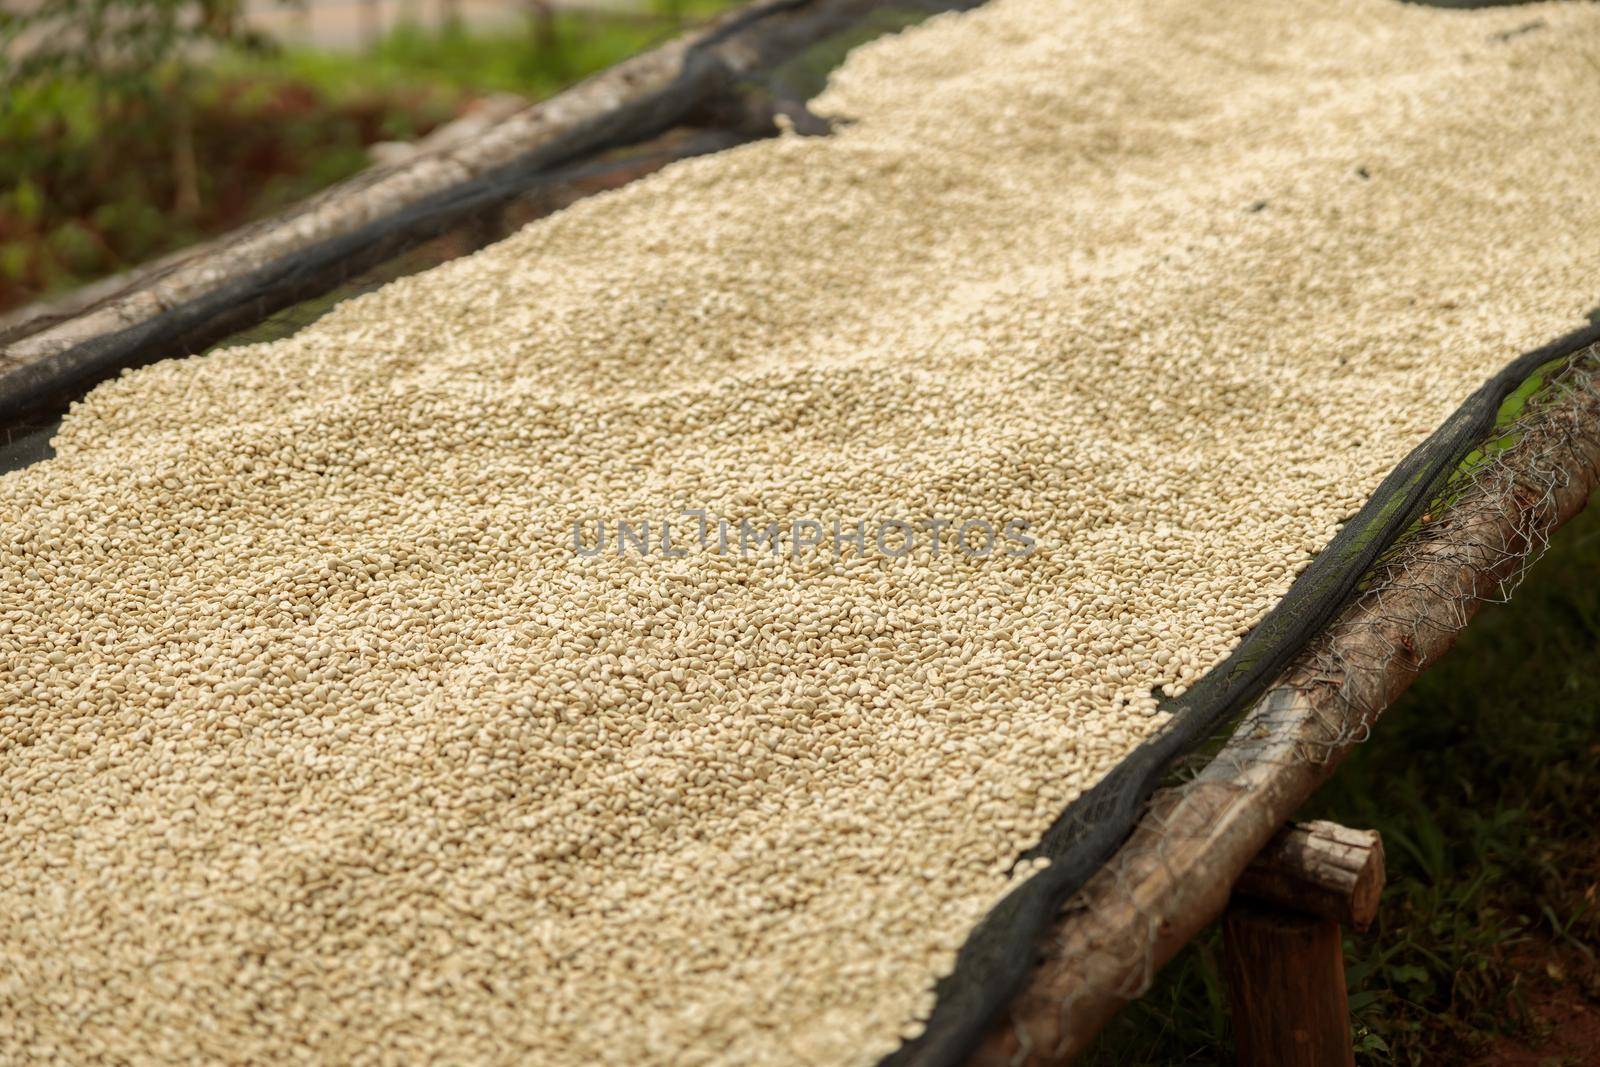 Close up of coffee natural drying process at washing station by Yaroslav_astakhov